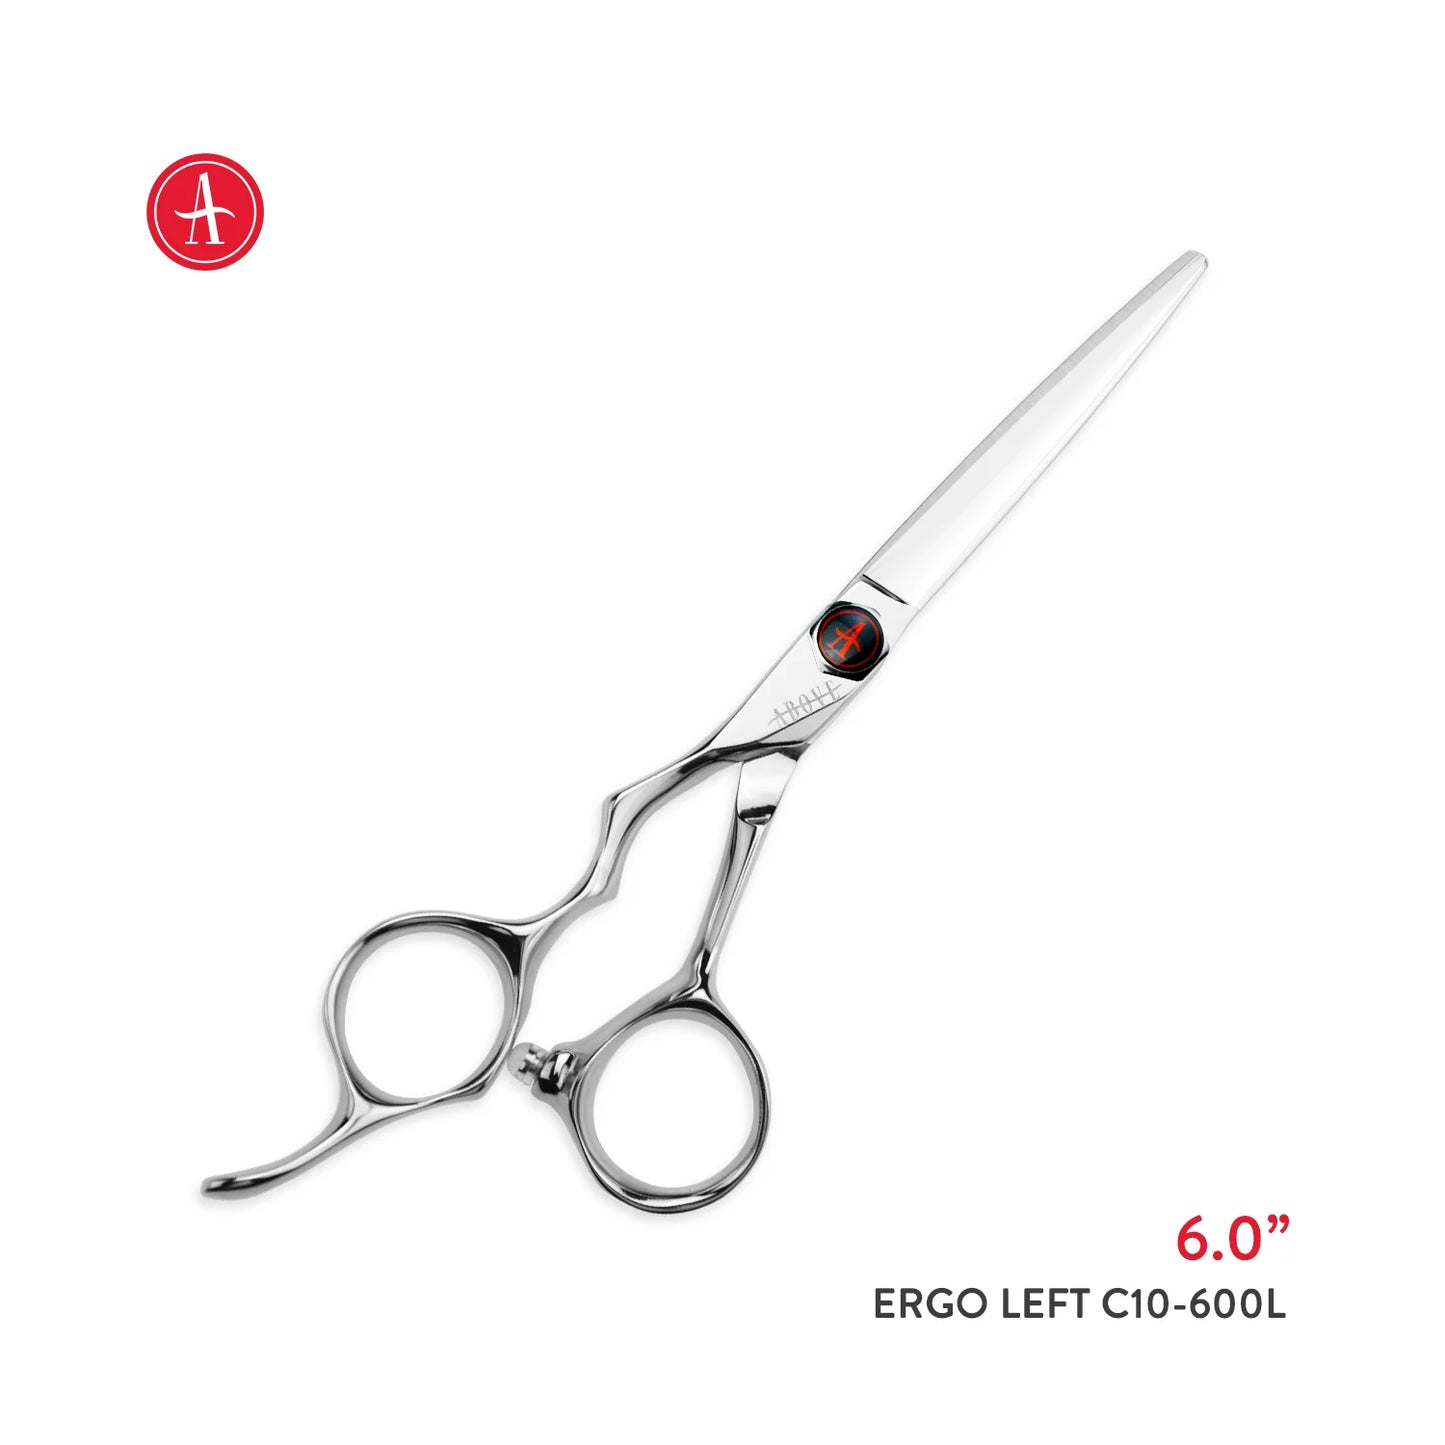 Above Ergo Left Hair Cutting Shears – 5.5, 6.0, 6.5, 7.0